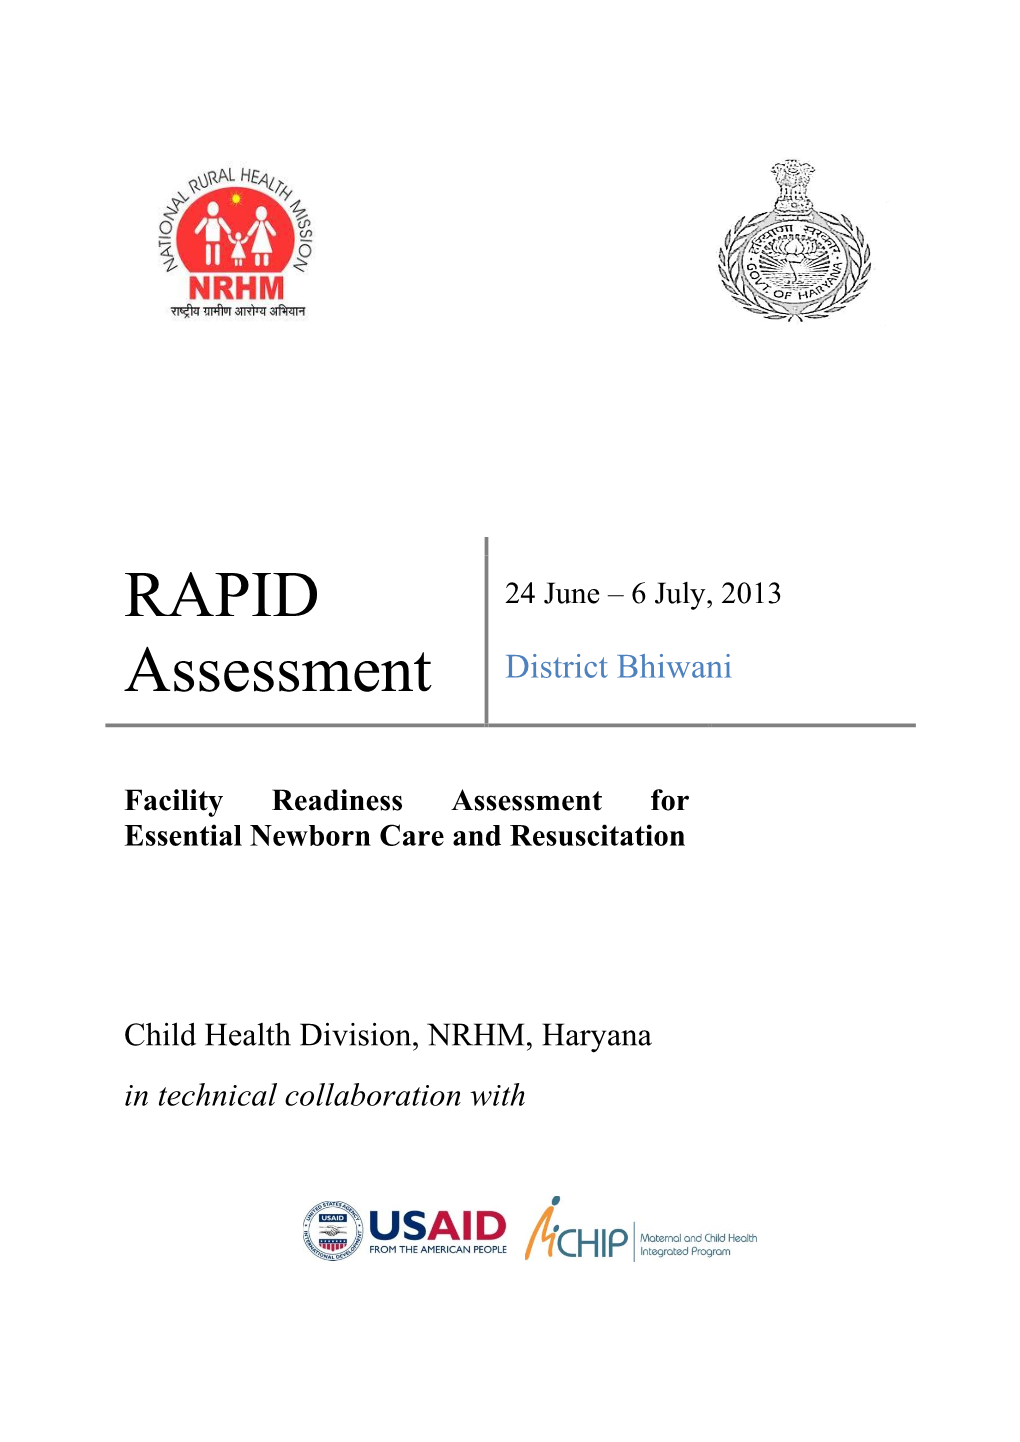 RAPID Assessment District Bhiwani